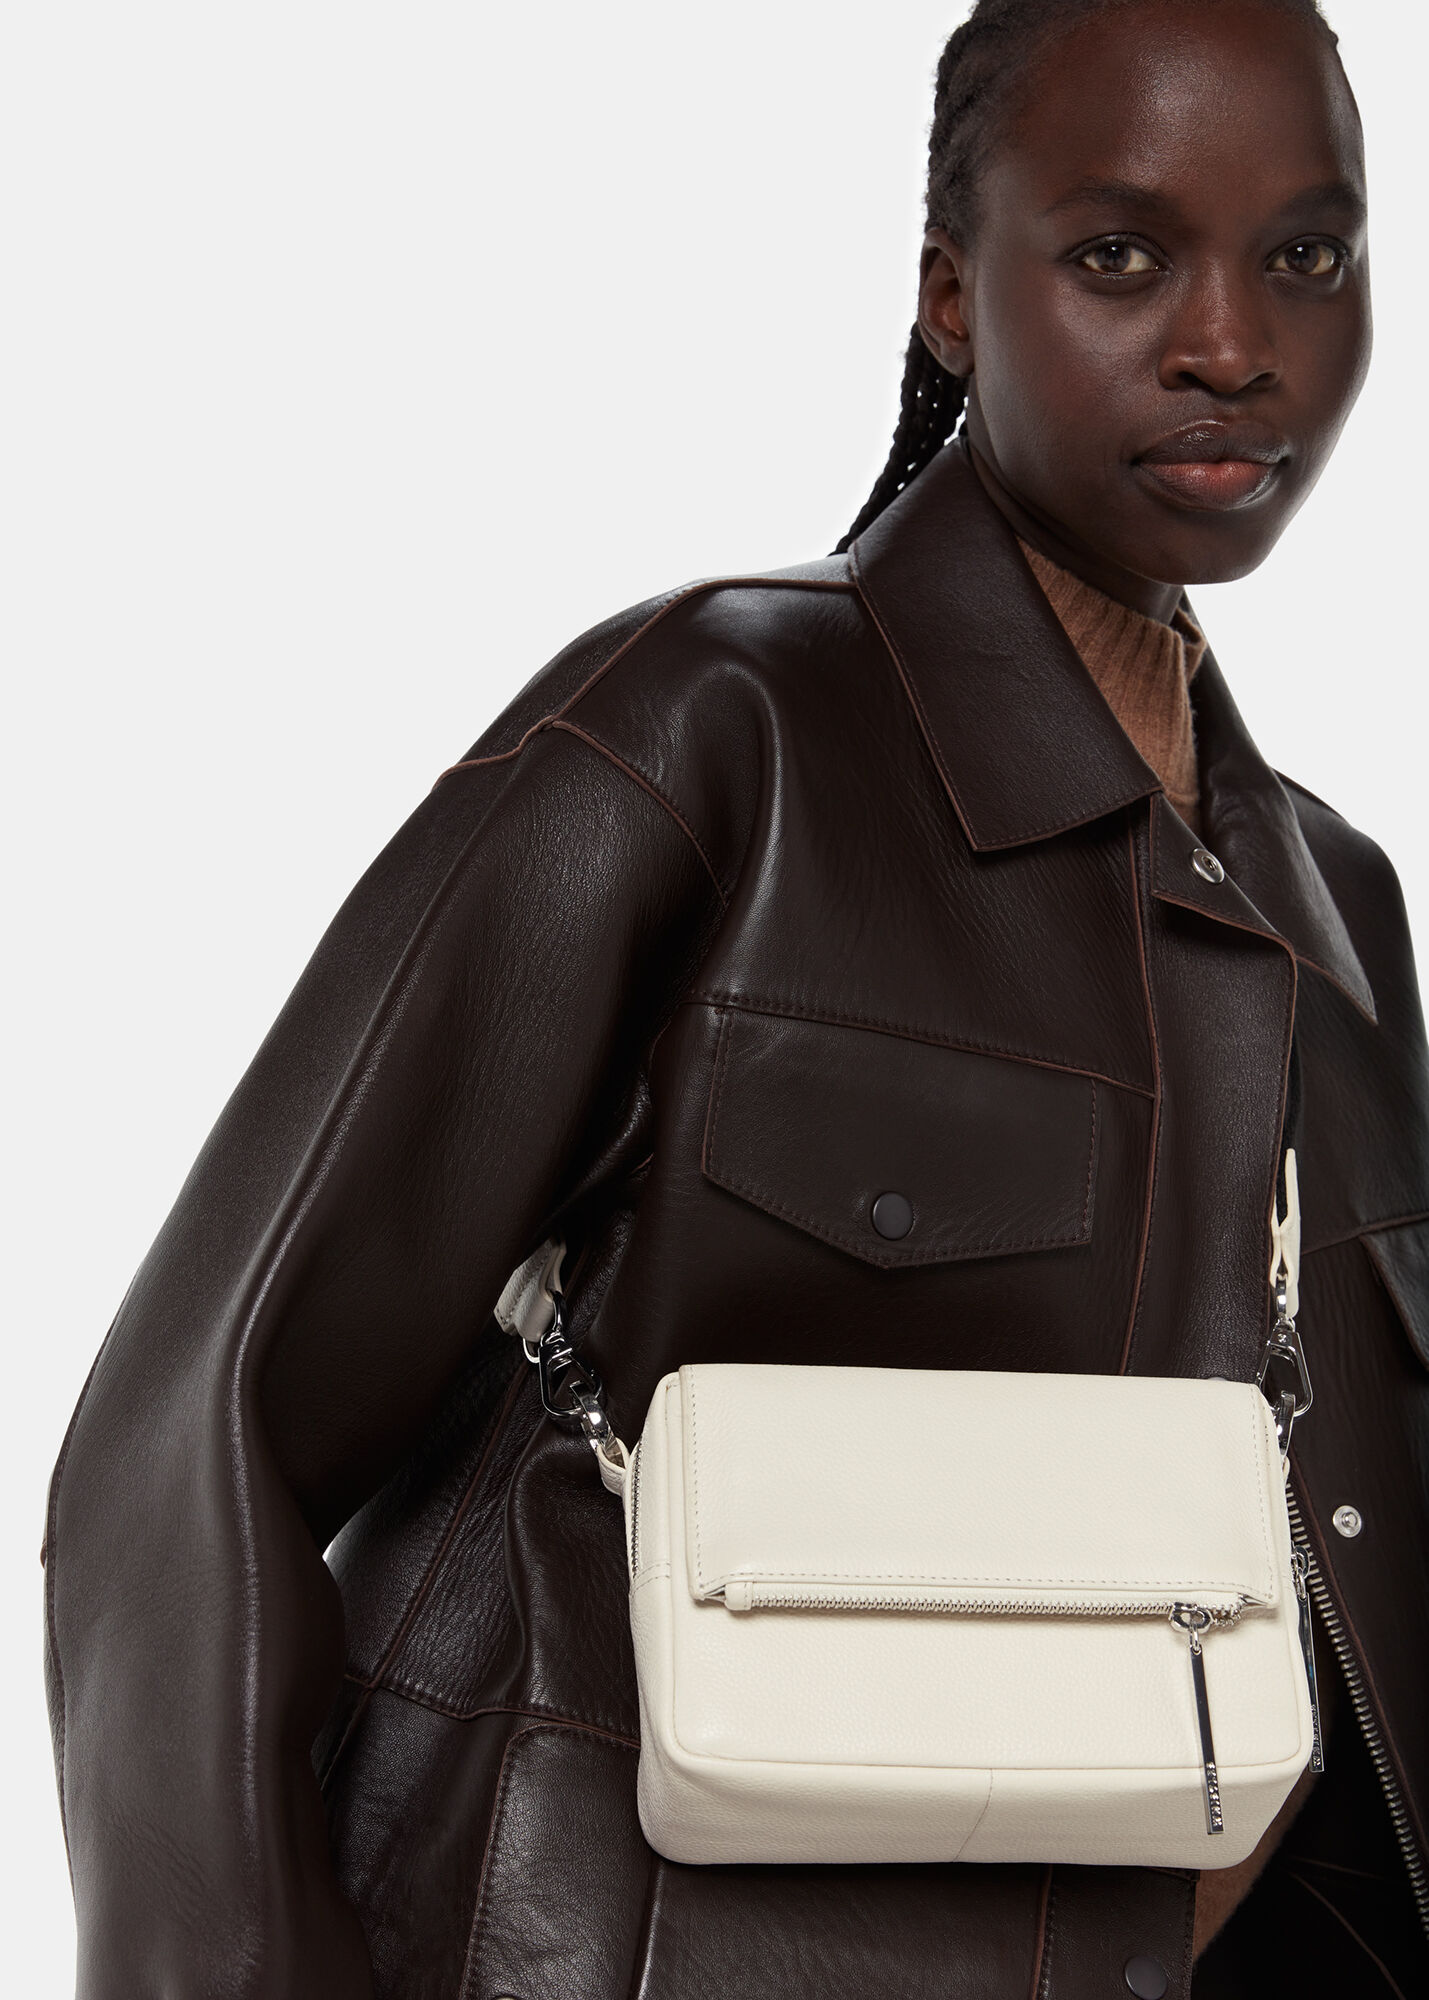 Bibi White Leather Crossbody Bag With Strap | Whistles